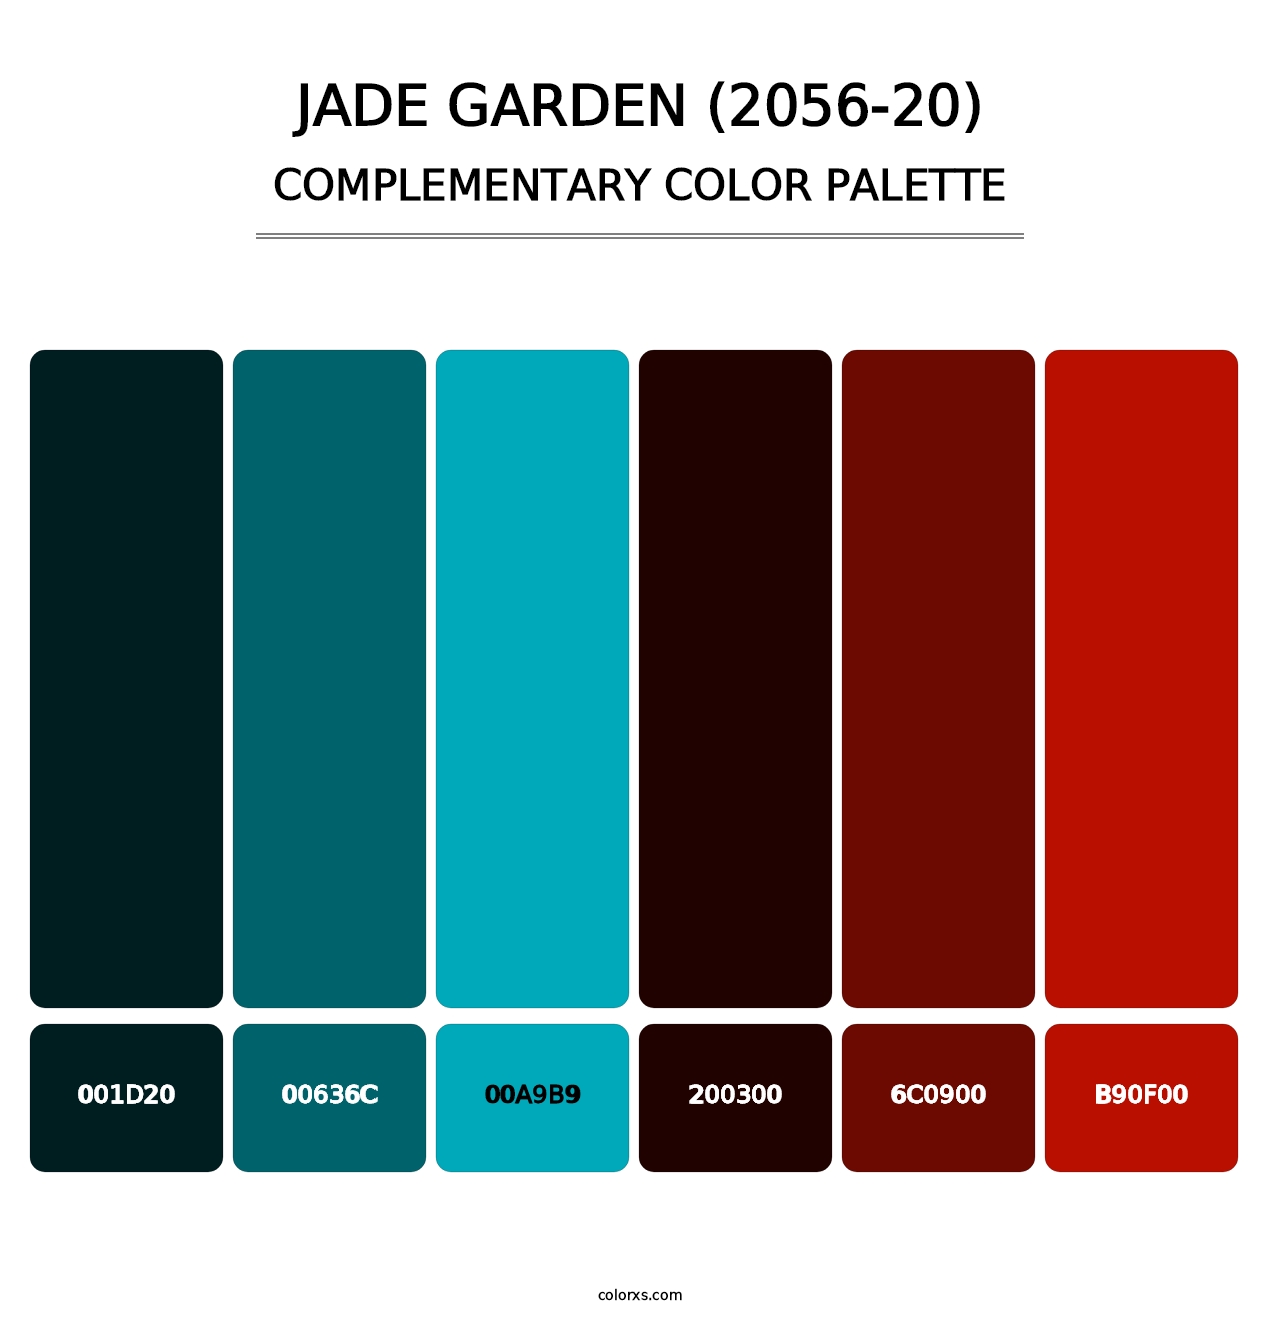 Jade Garden (2056-20) - Complementary Color Palette